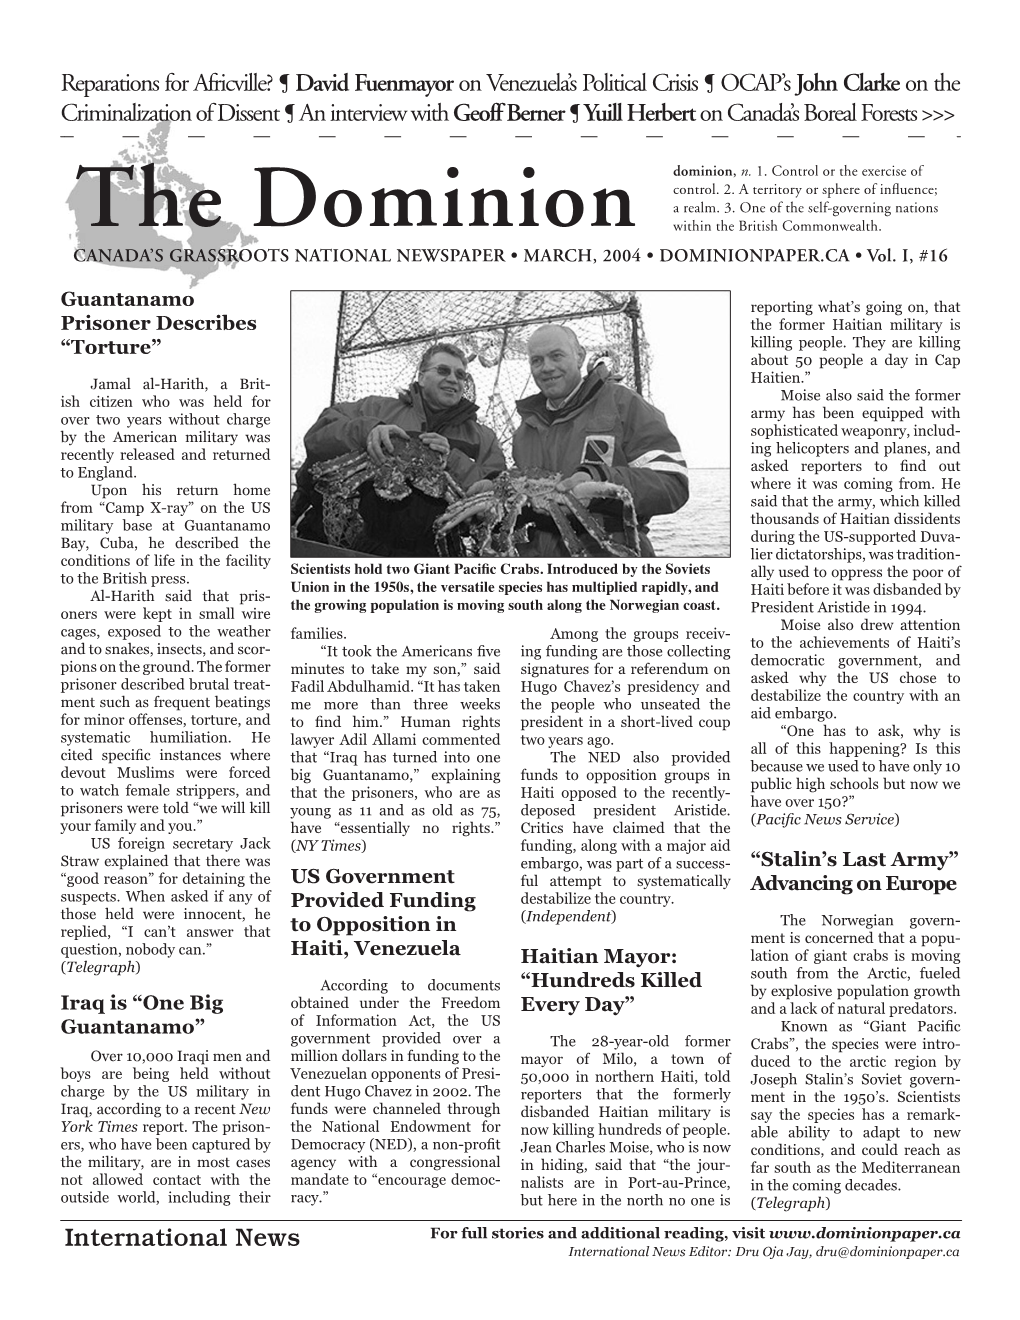 Dominion Issue